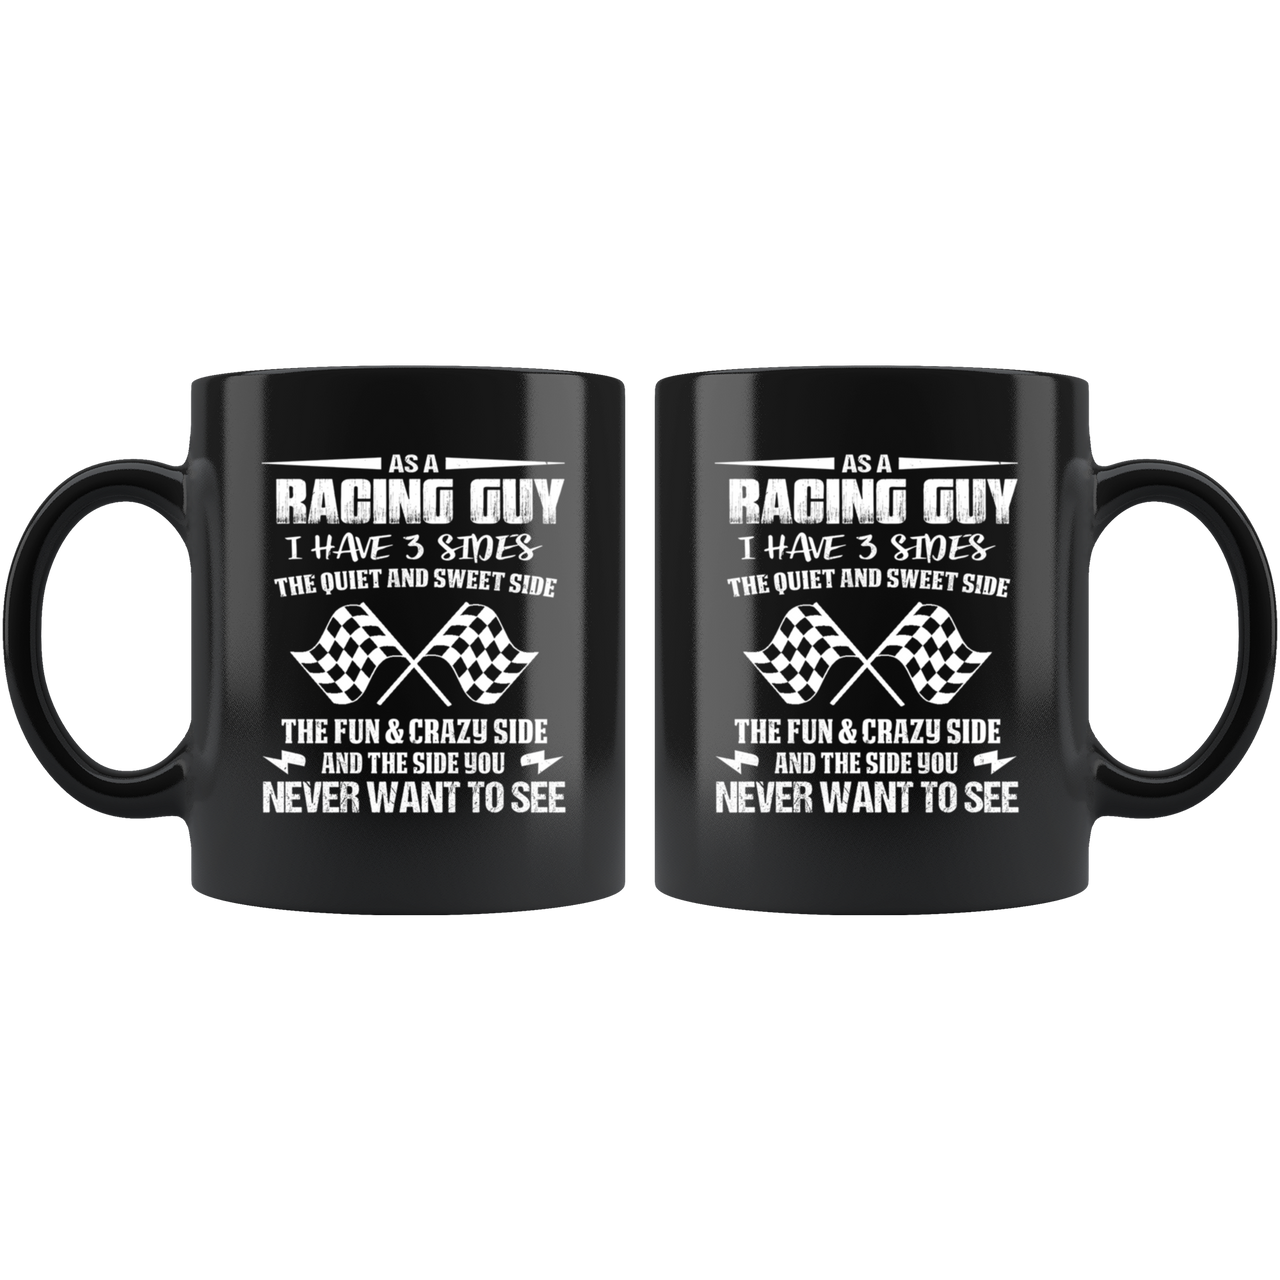 As A Racing Guy I Have 3 Sides Mug!